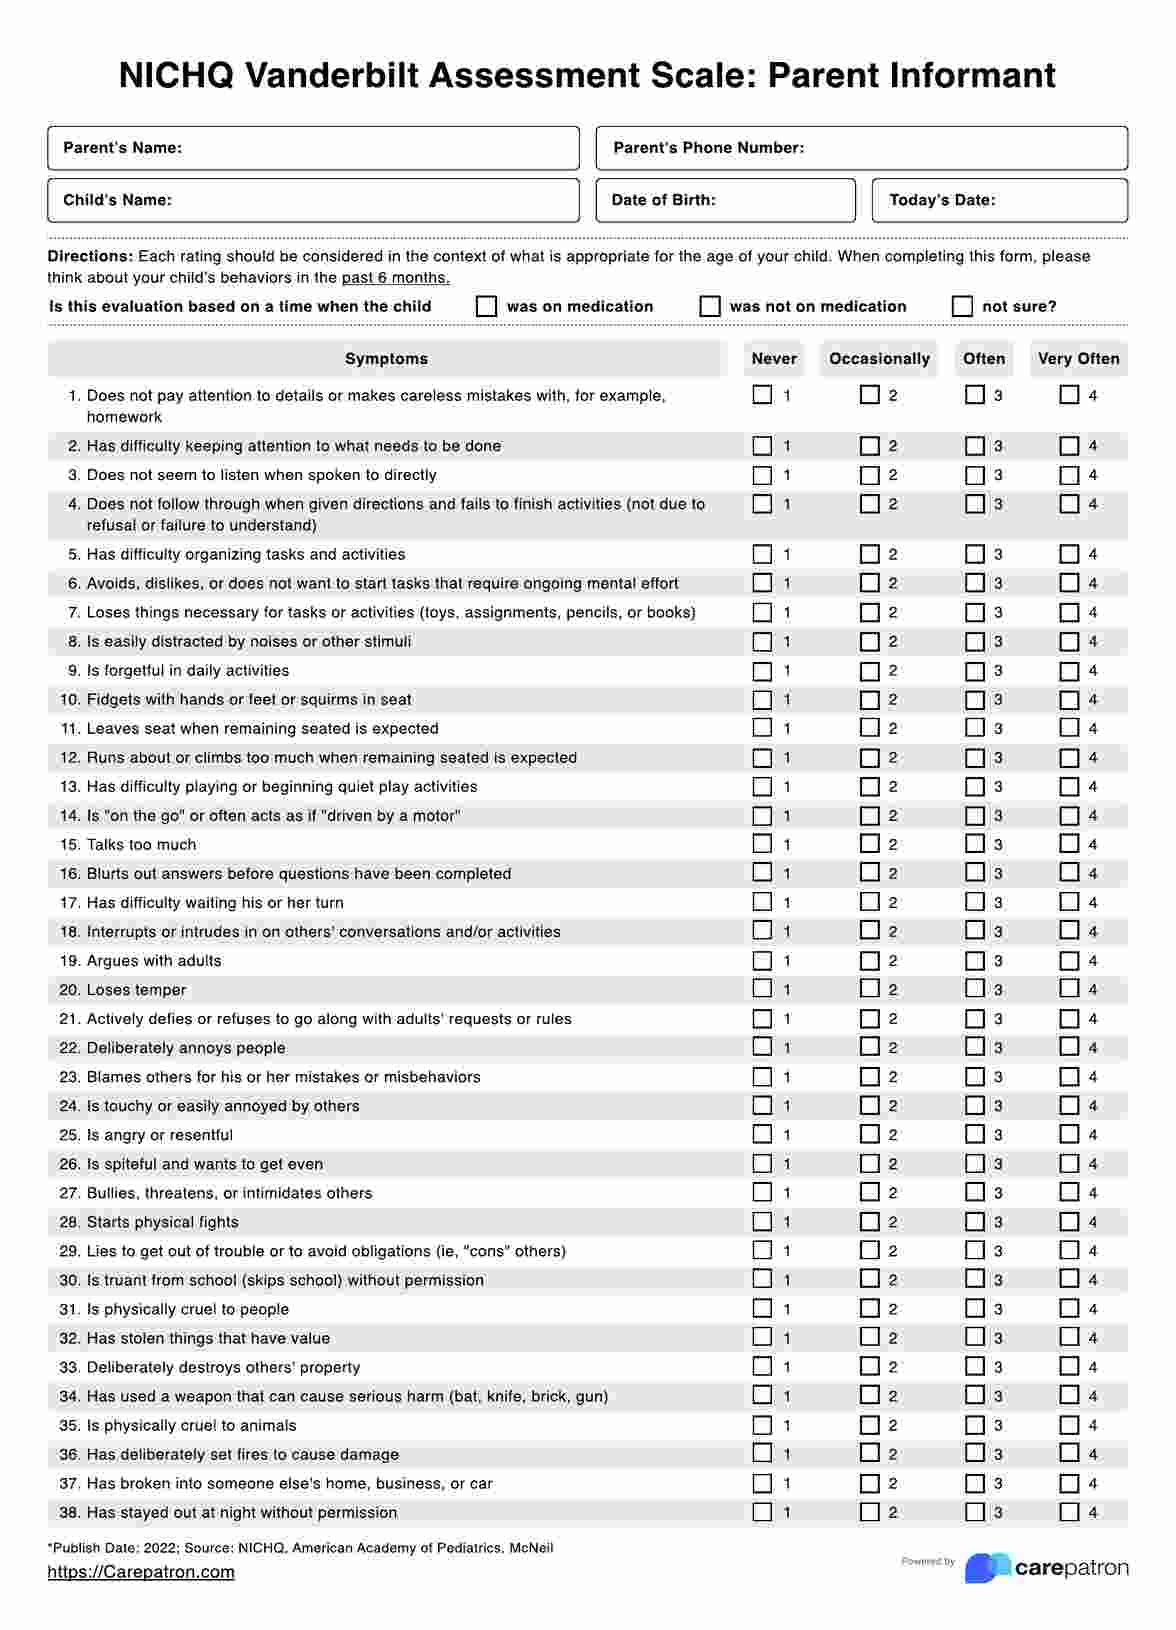 The NICHQ Vanderbilt Assessment Scale for Parents PDF Example